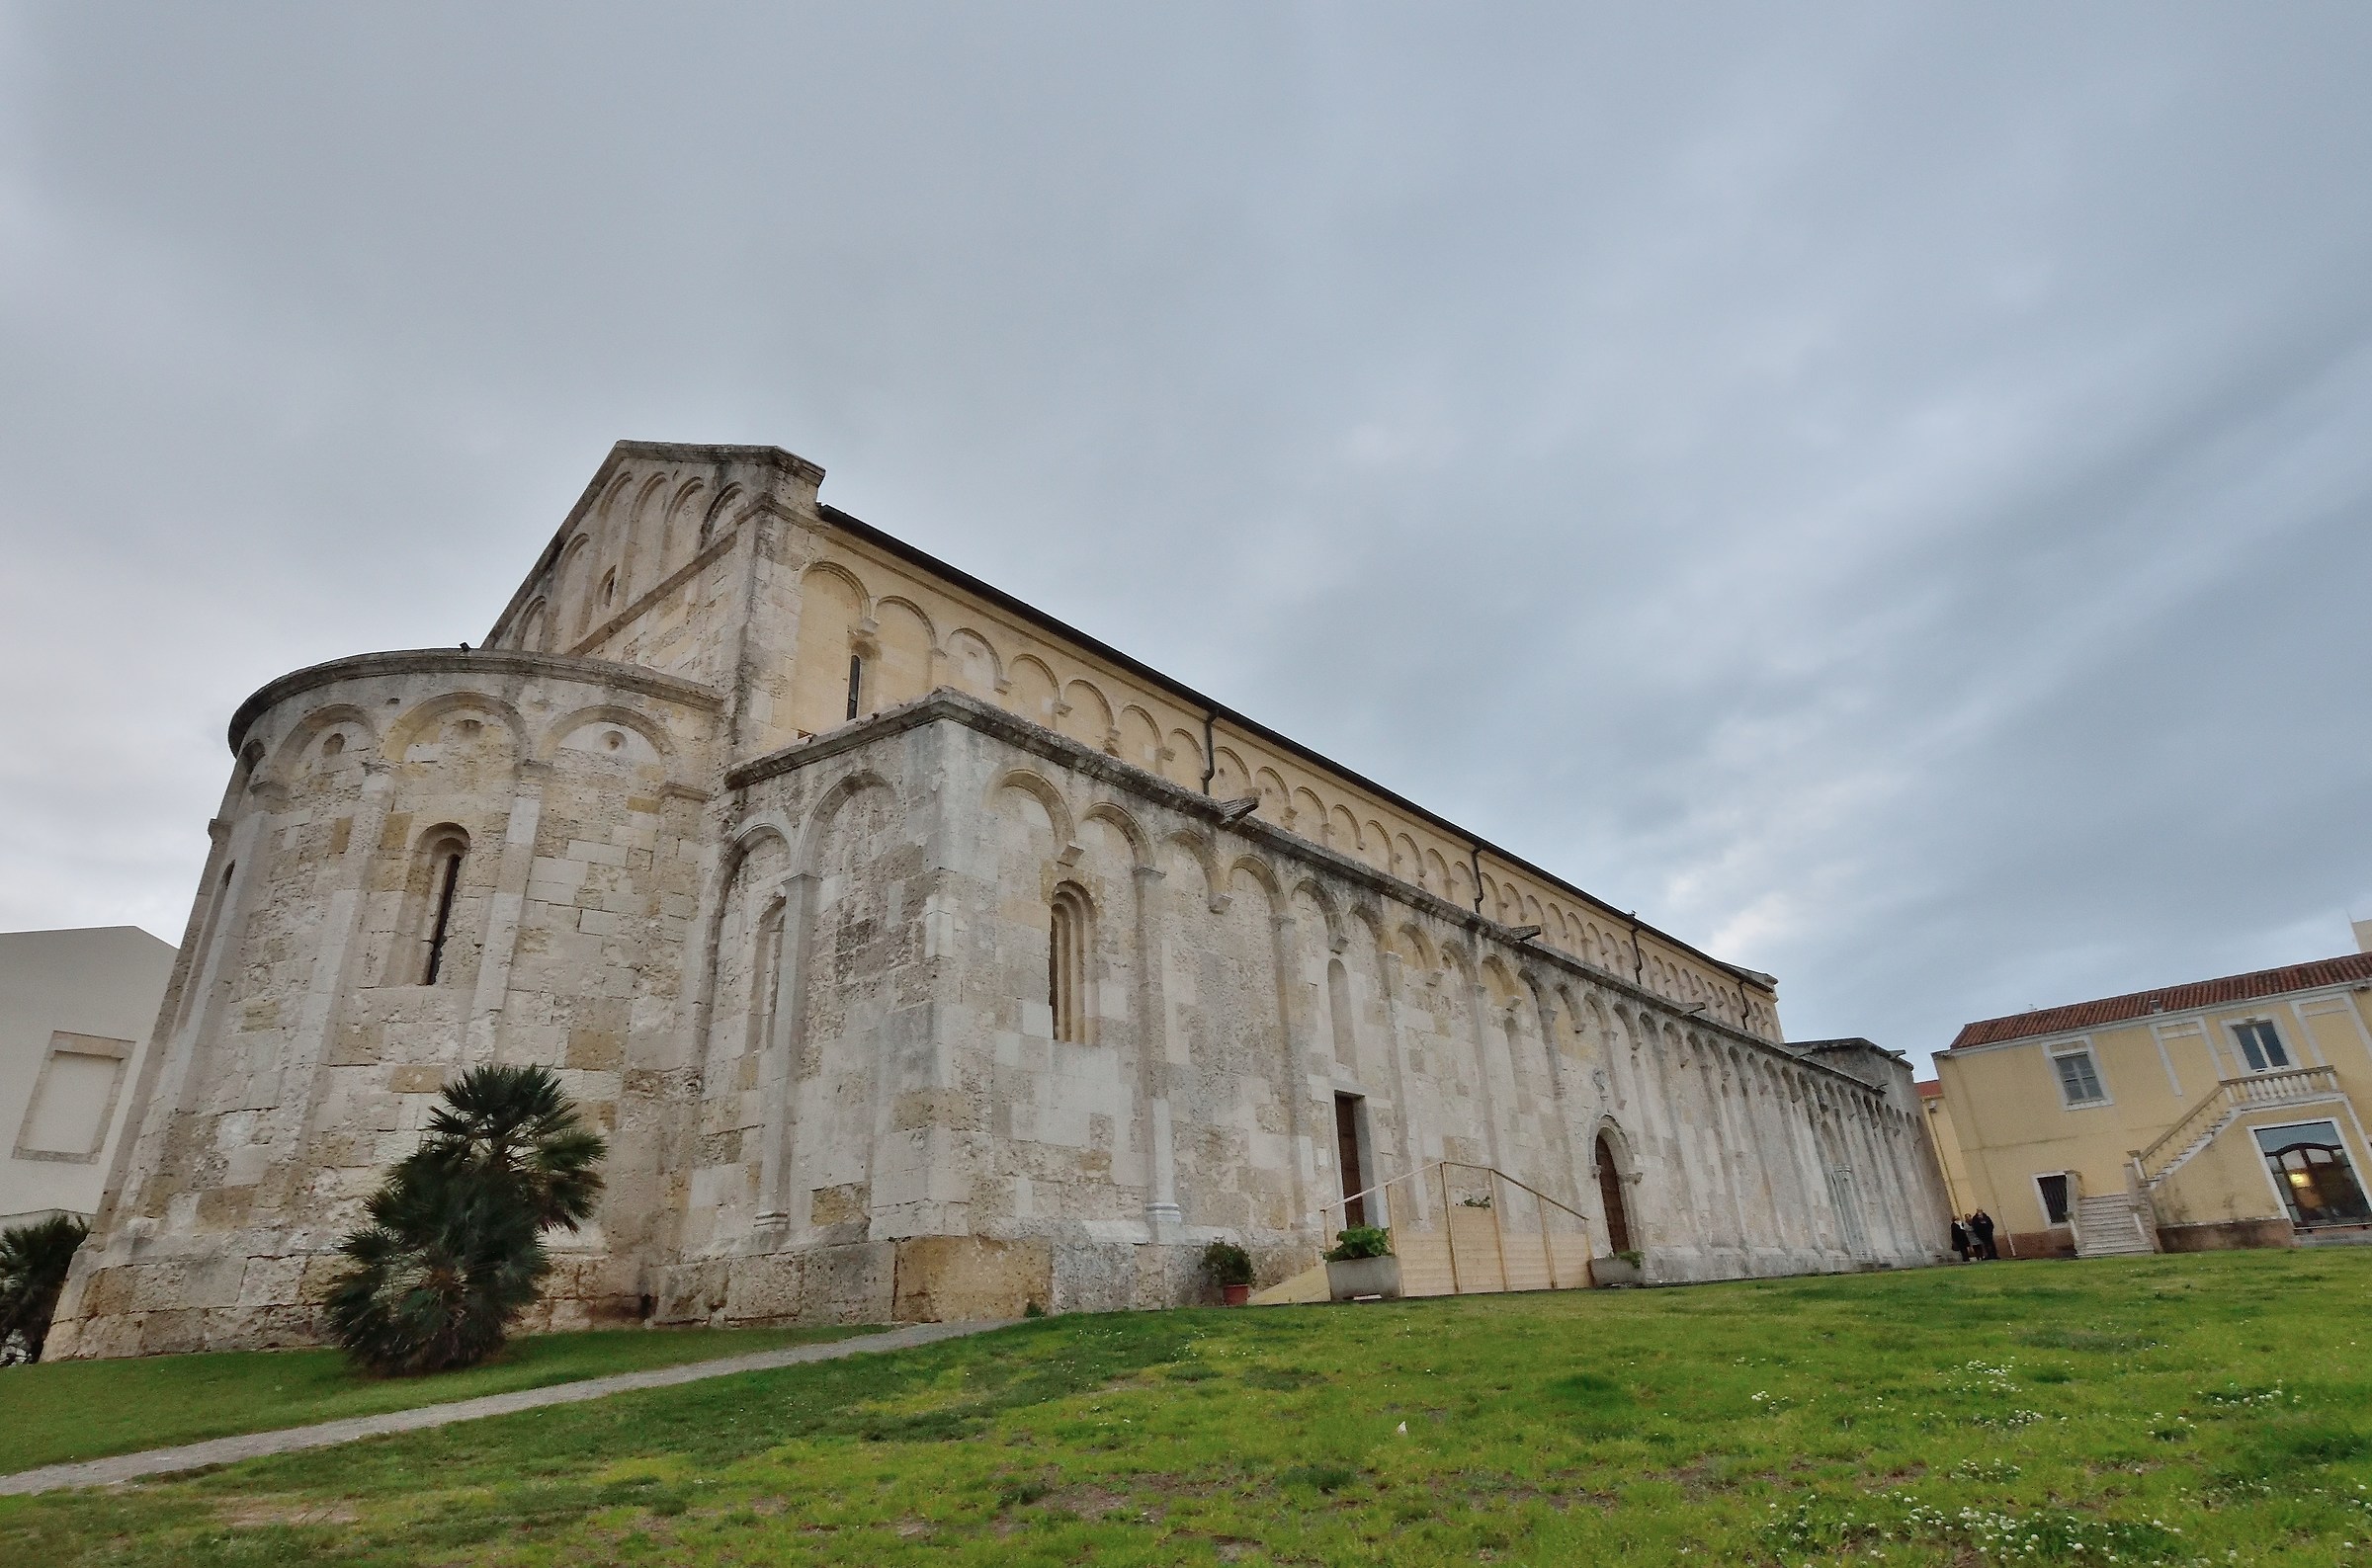 Basilica San Gavino ruined by nearby buildings...